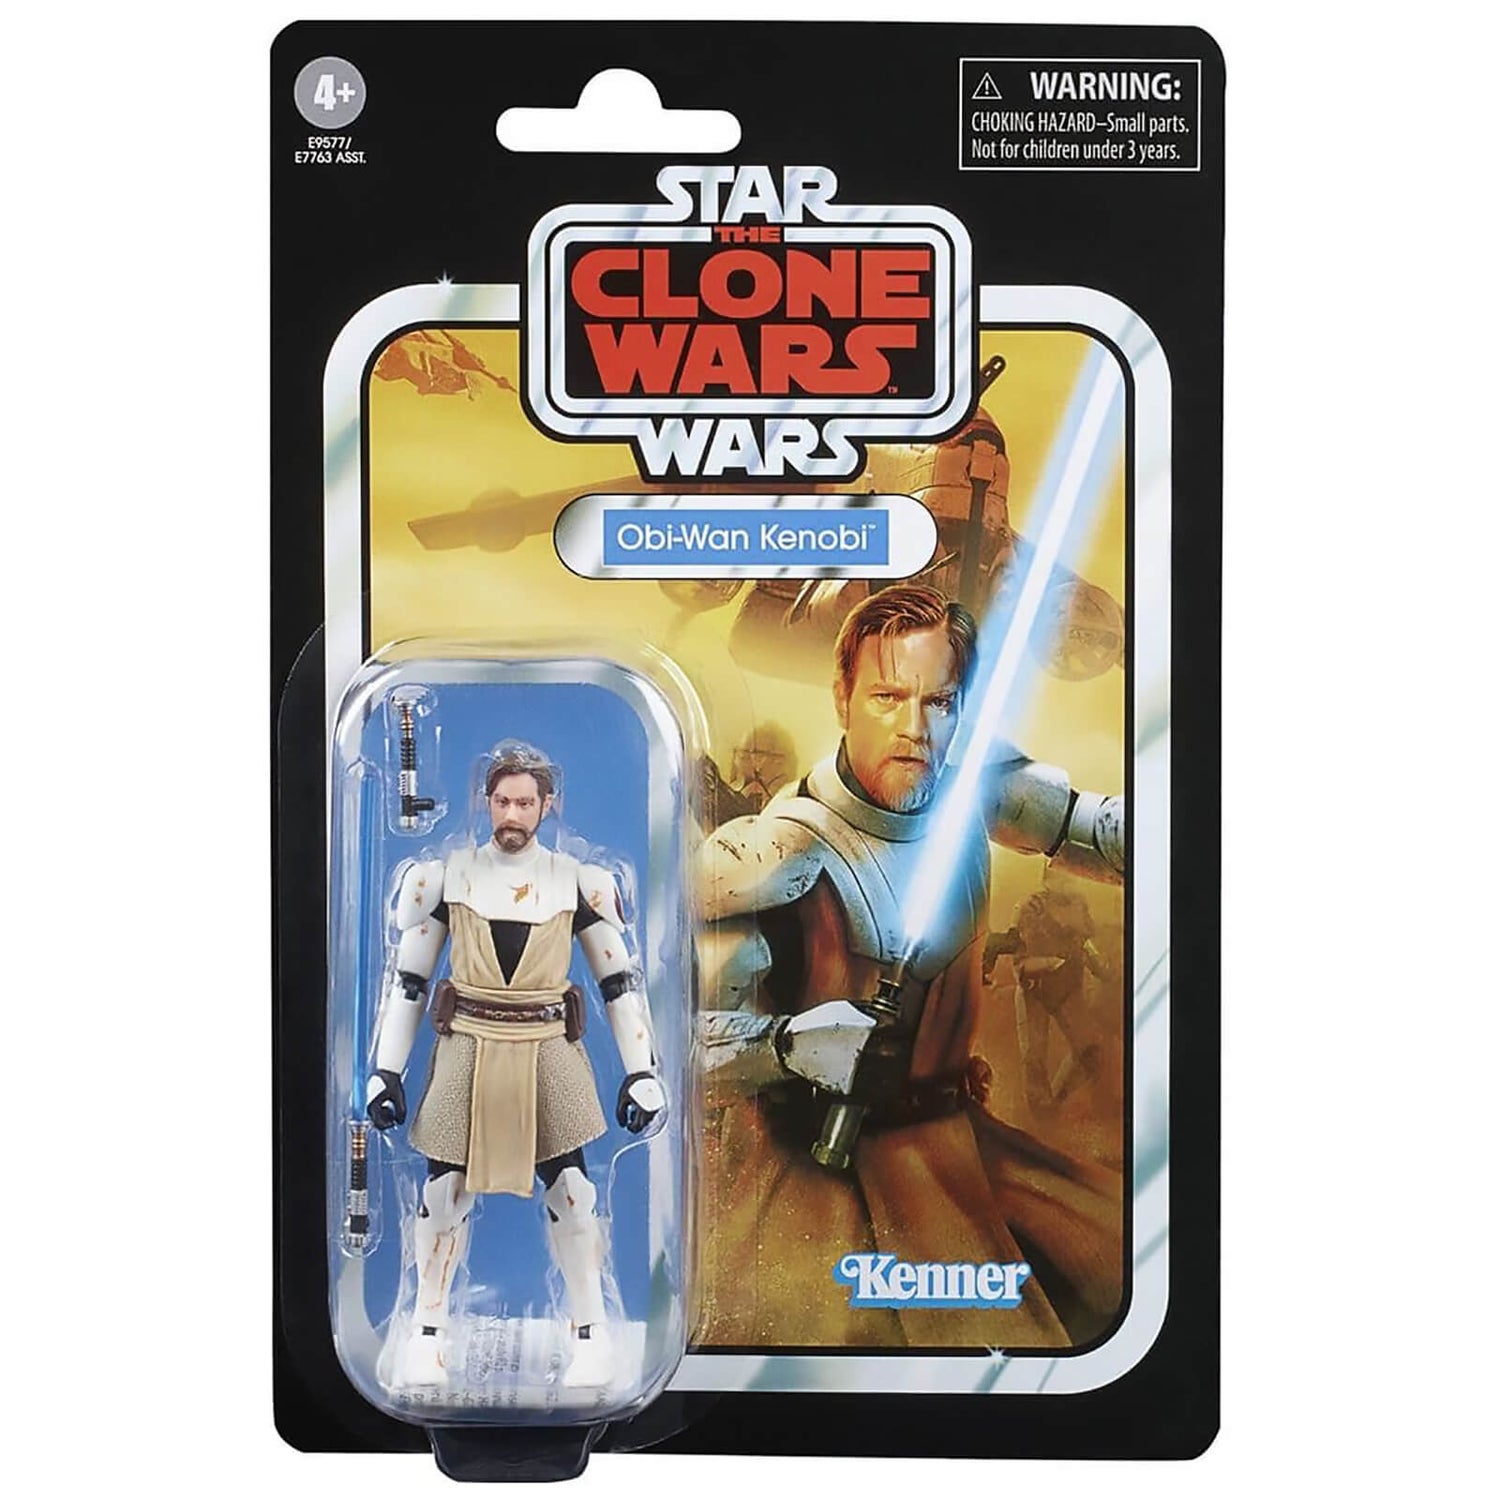 Hasbro Star Wars The Vintage Collection Obi-Wan Kenobi - The Clone Wars